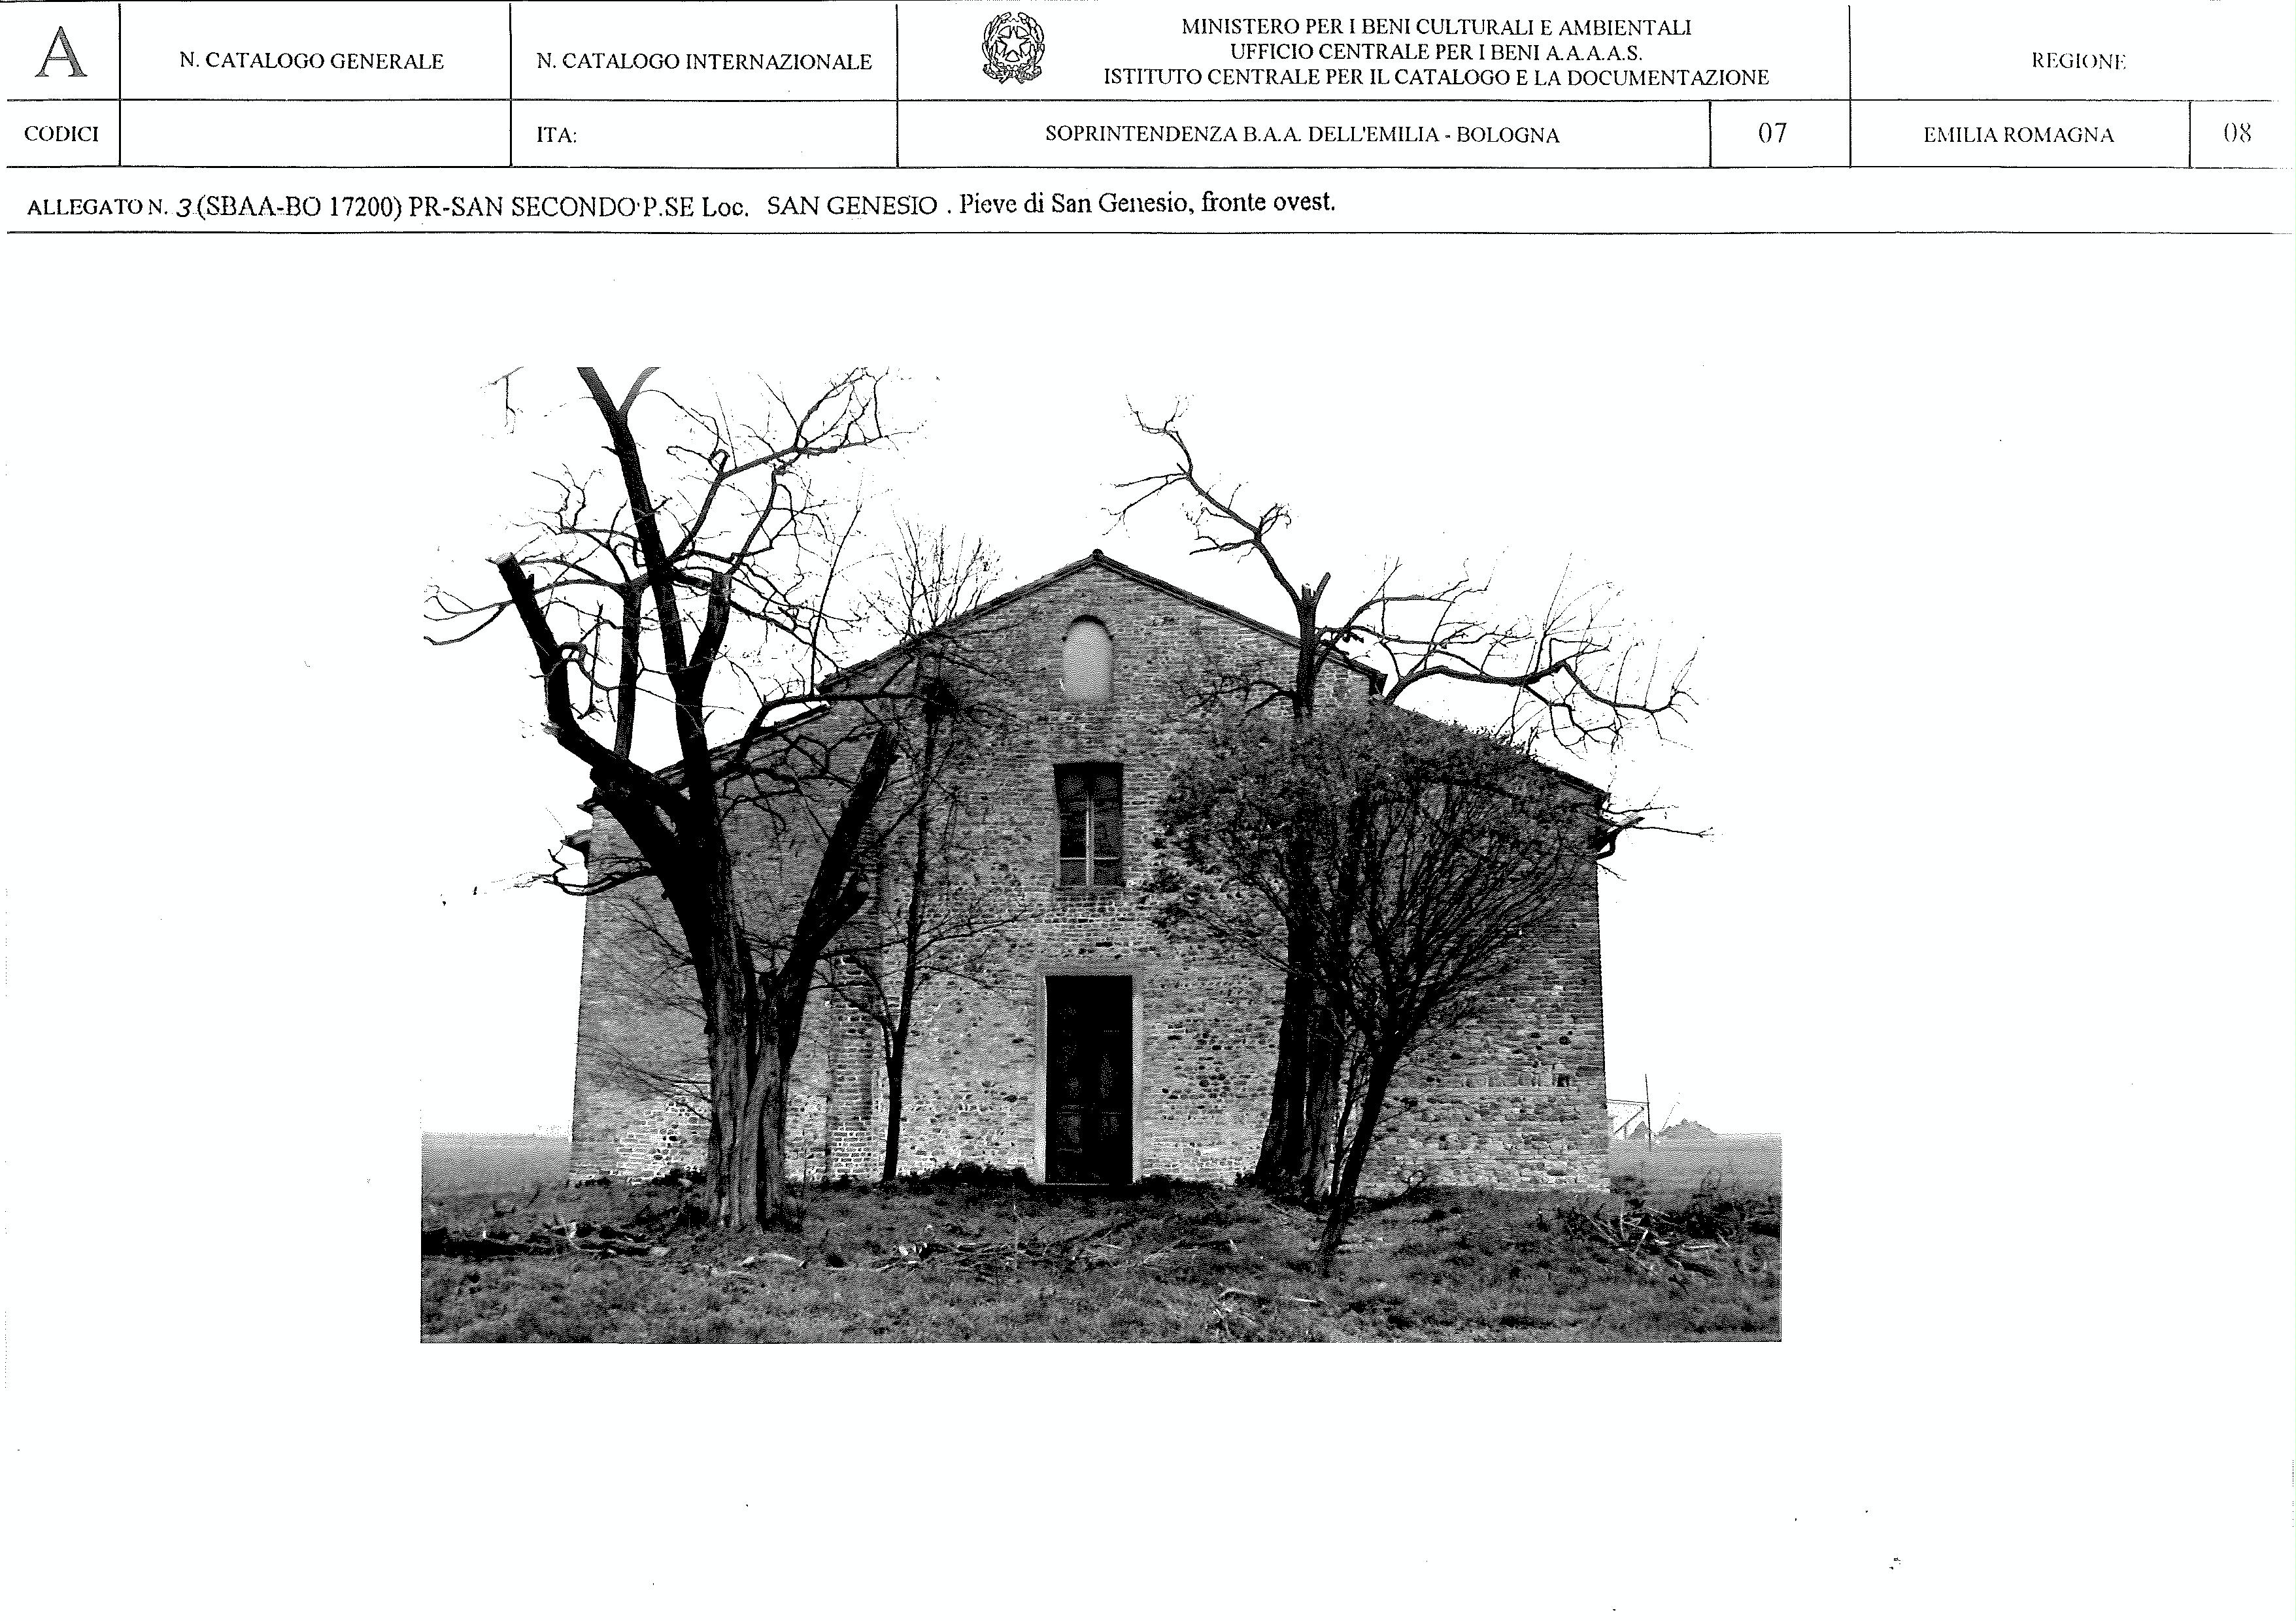 Pieve di S. Genesio (chiesa) - San Secondo Parmense (PR) 